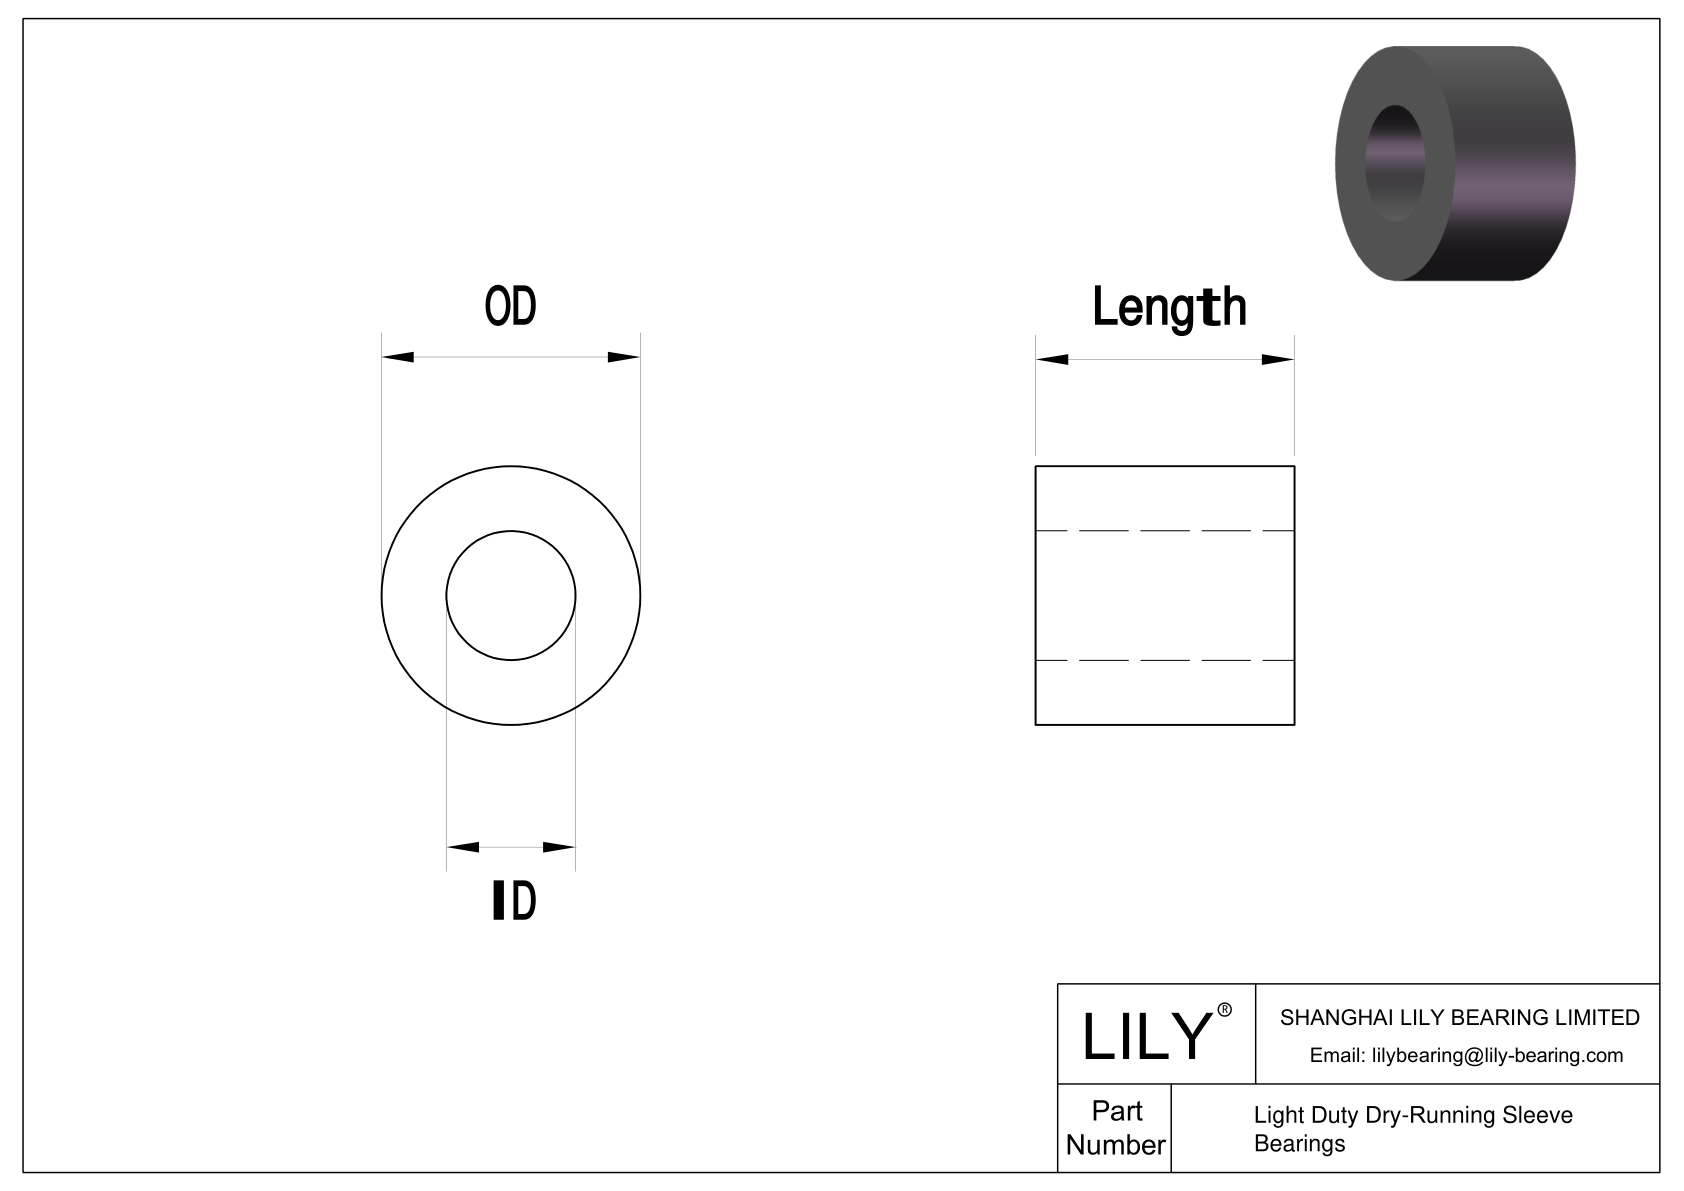 6389K343 Light Duty Dry-Running Sleeve Bearings cad drawing